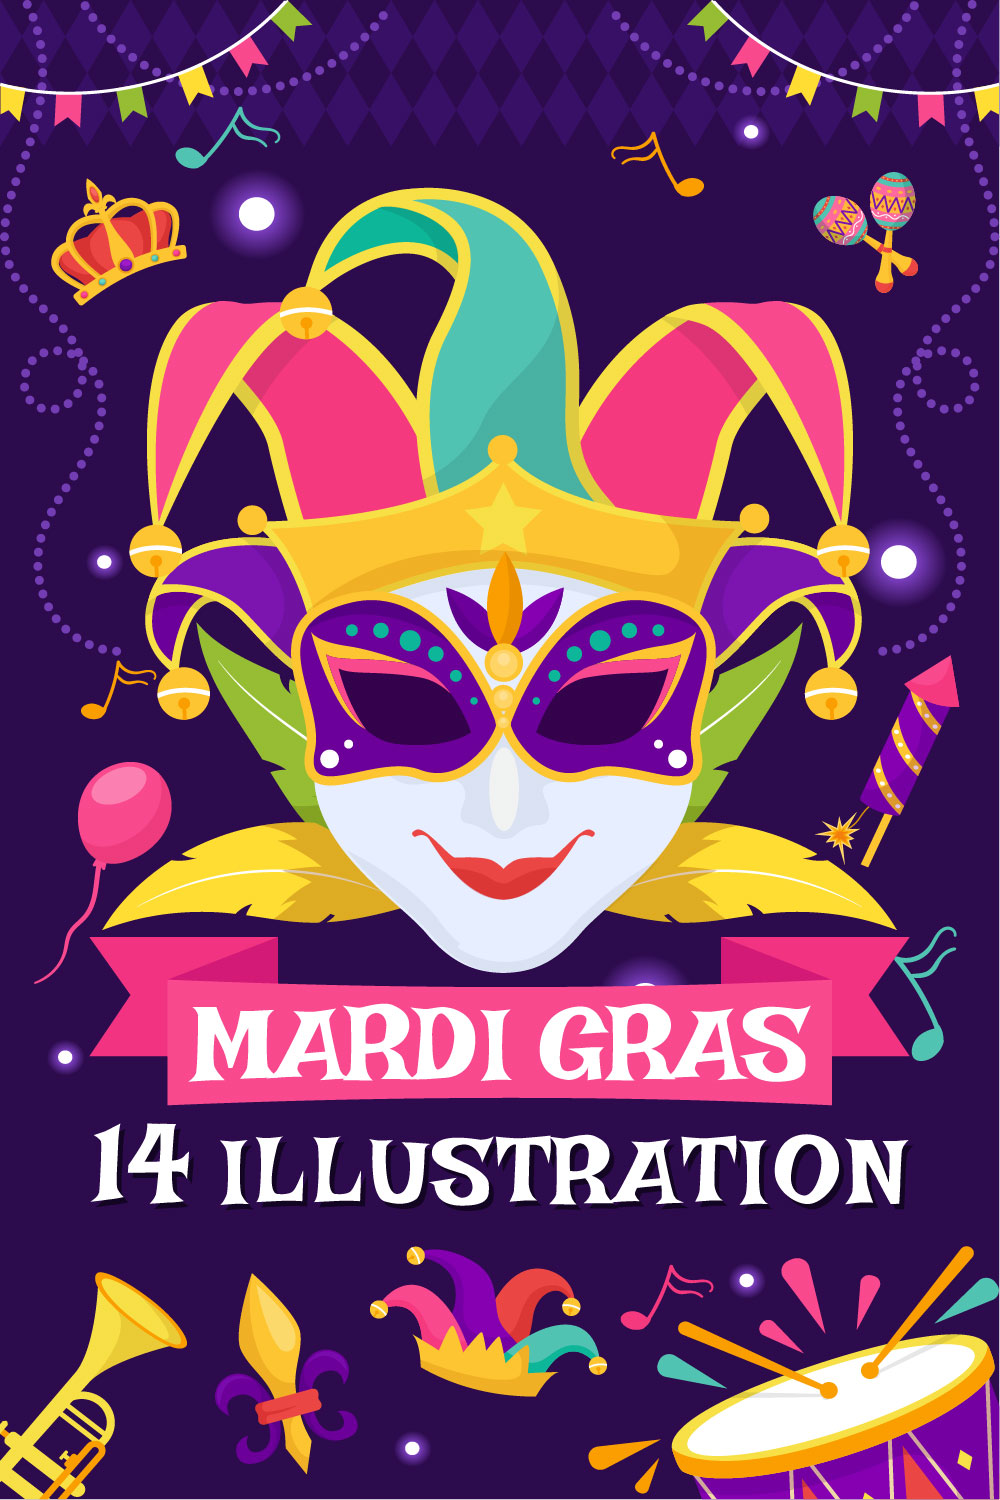 14 Mardi Gras Carnival Illustration pinterest preview image.